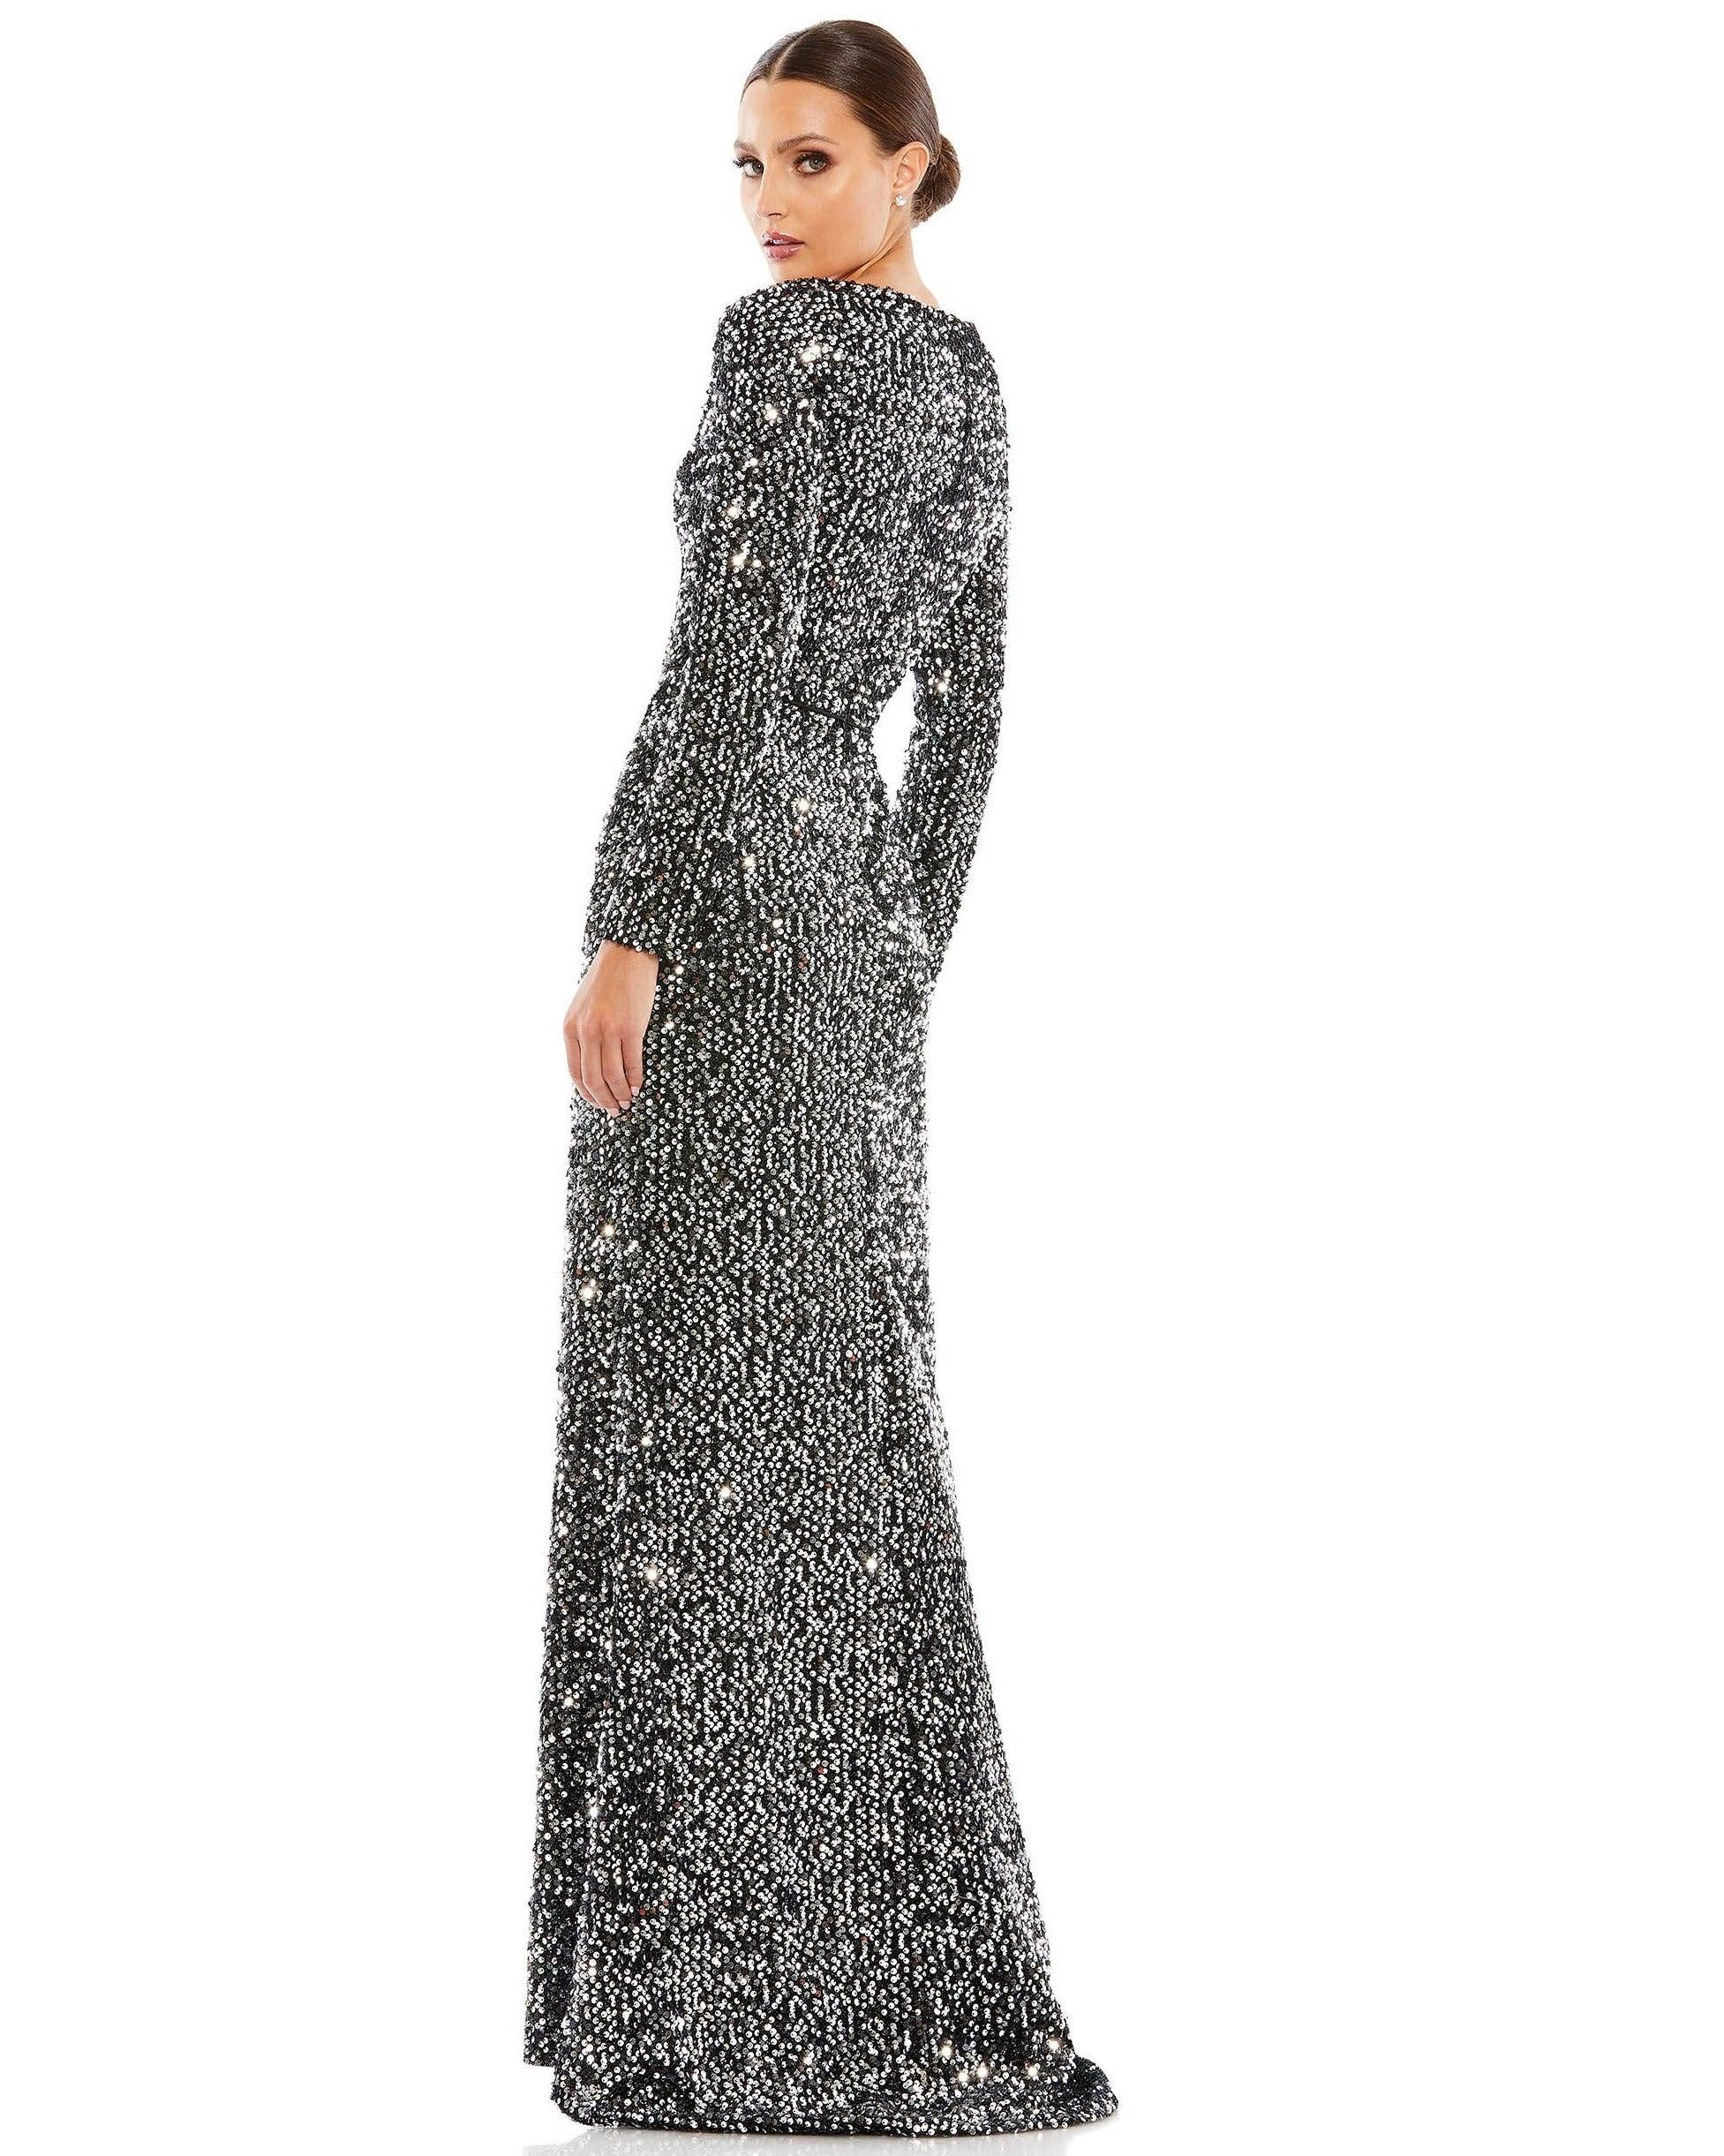 Mac Duggal Long Sleeve Sequins Formal Dress 26445 - The Dress Outlet